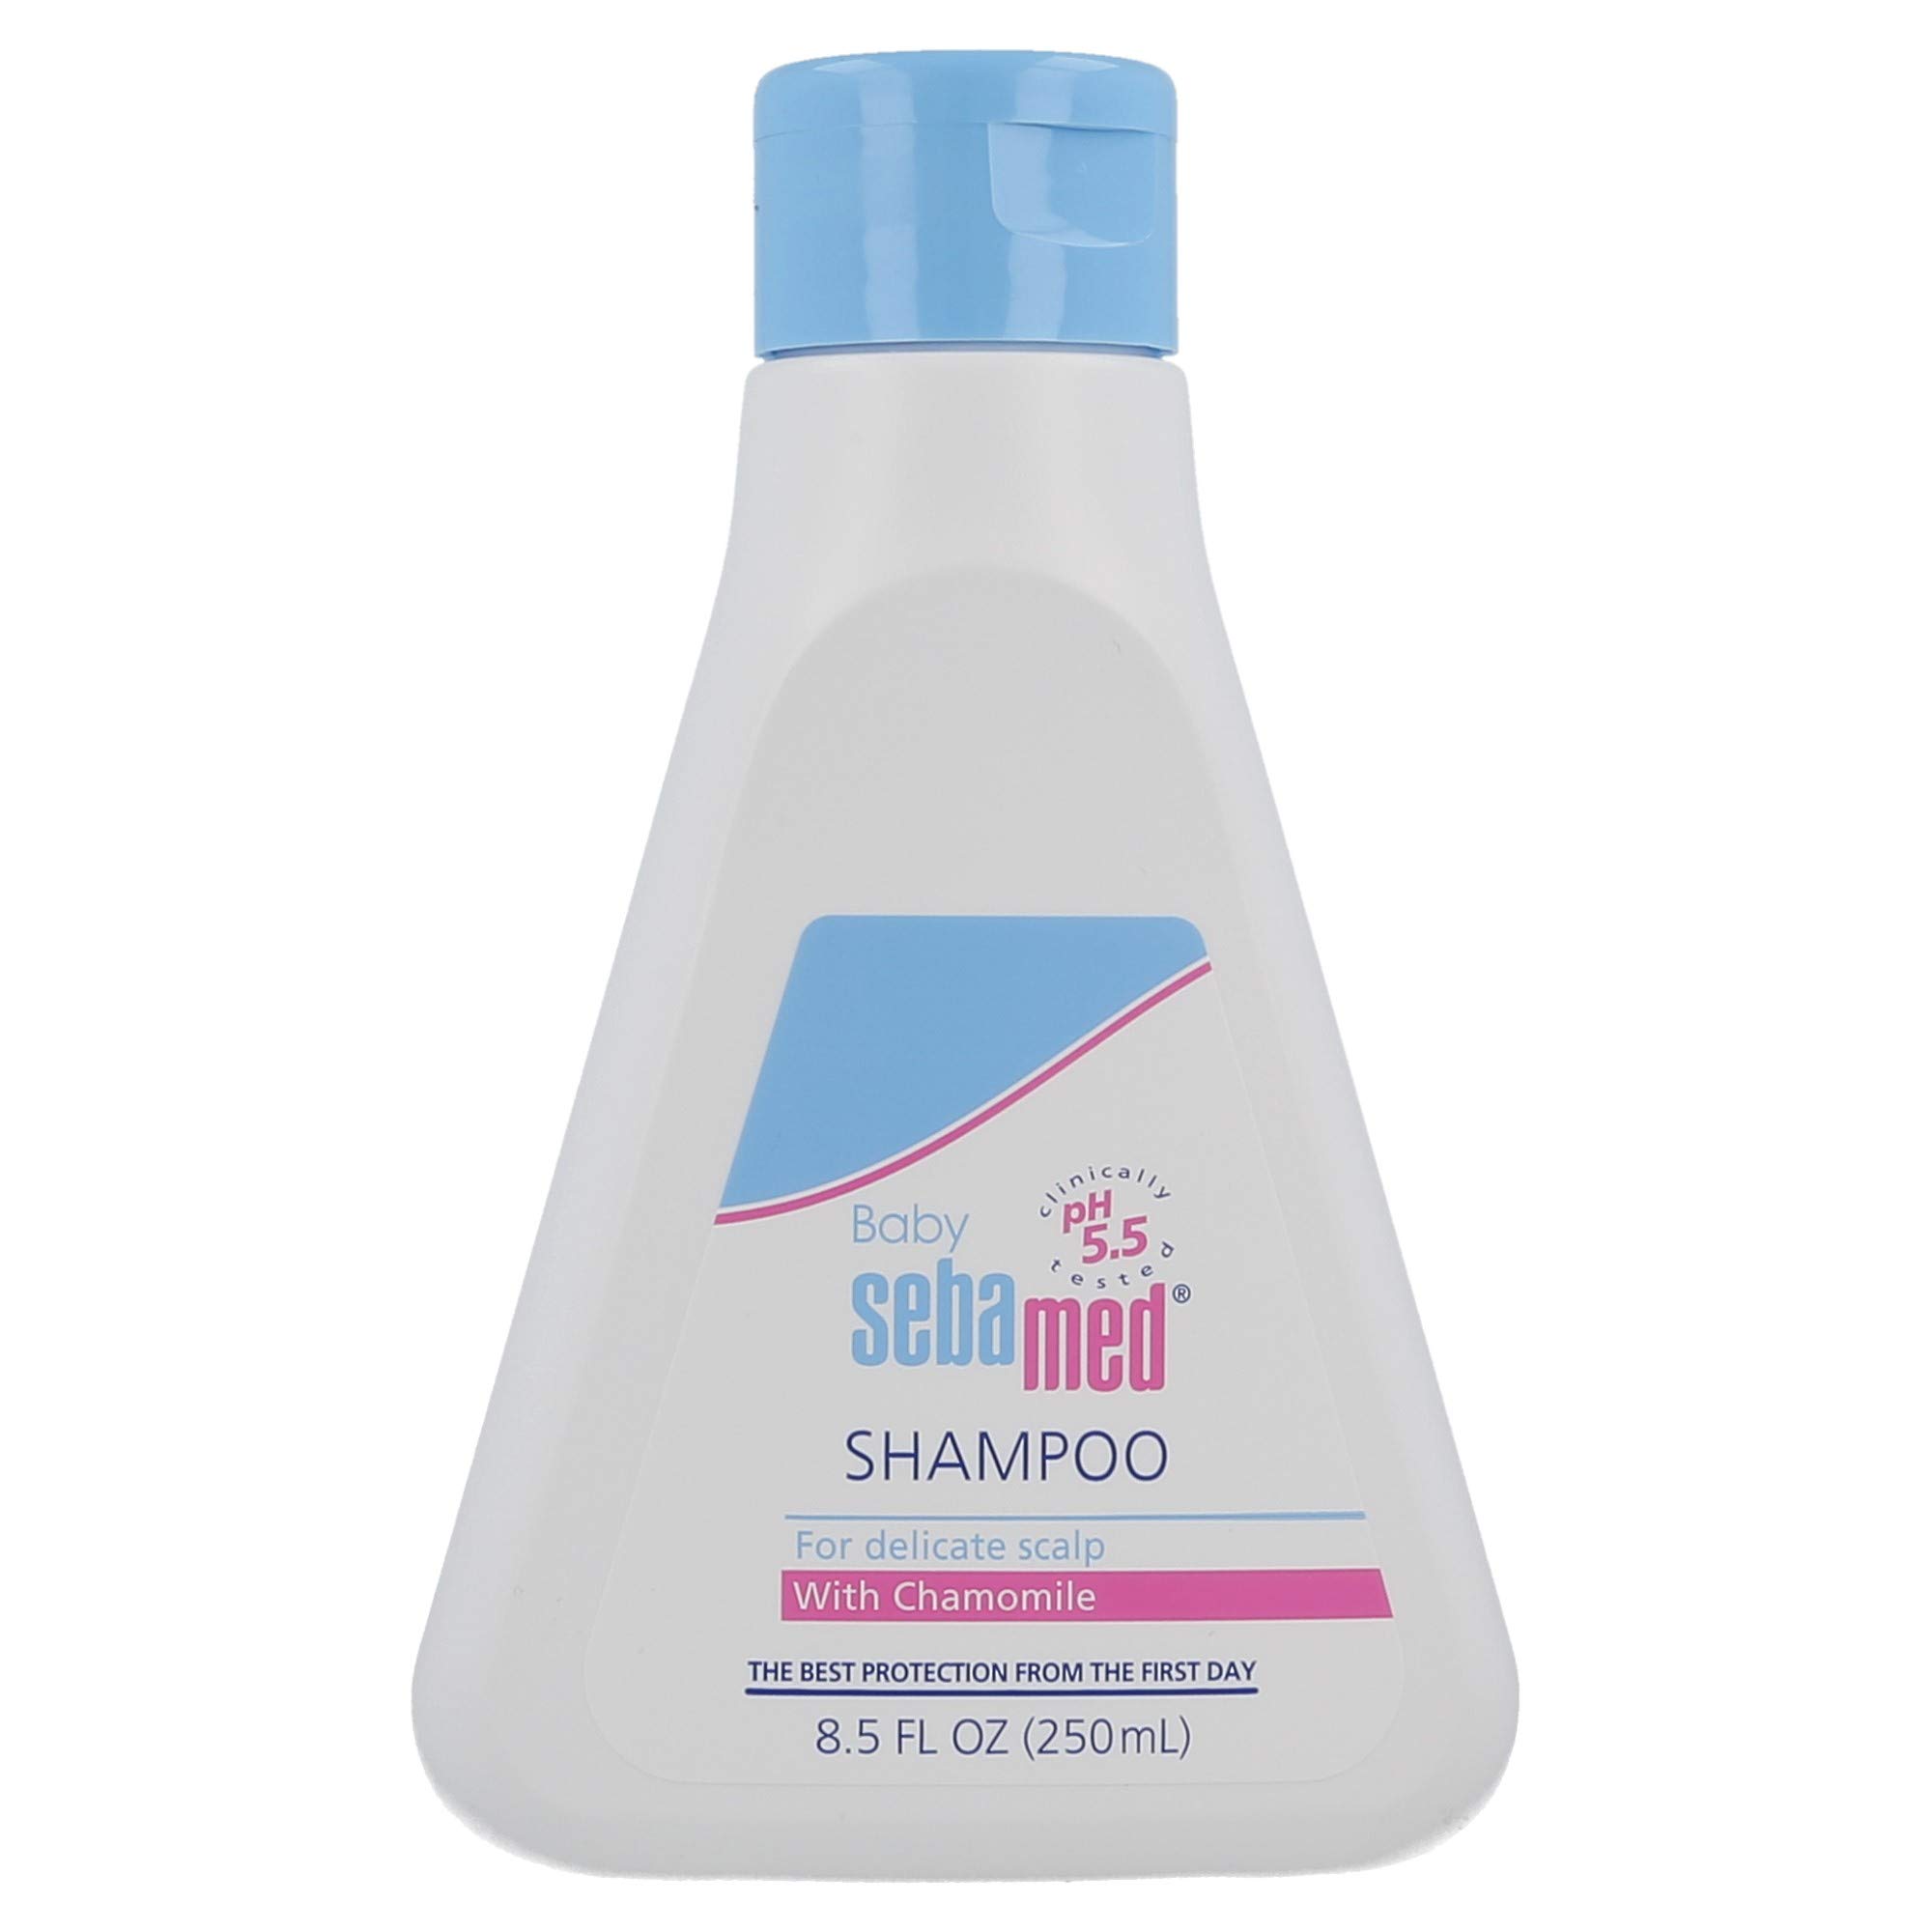 Sebamed Anti Hairloss Shampoo Price - Buy Online at ₹675 in India